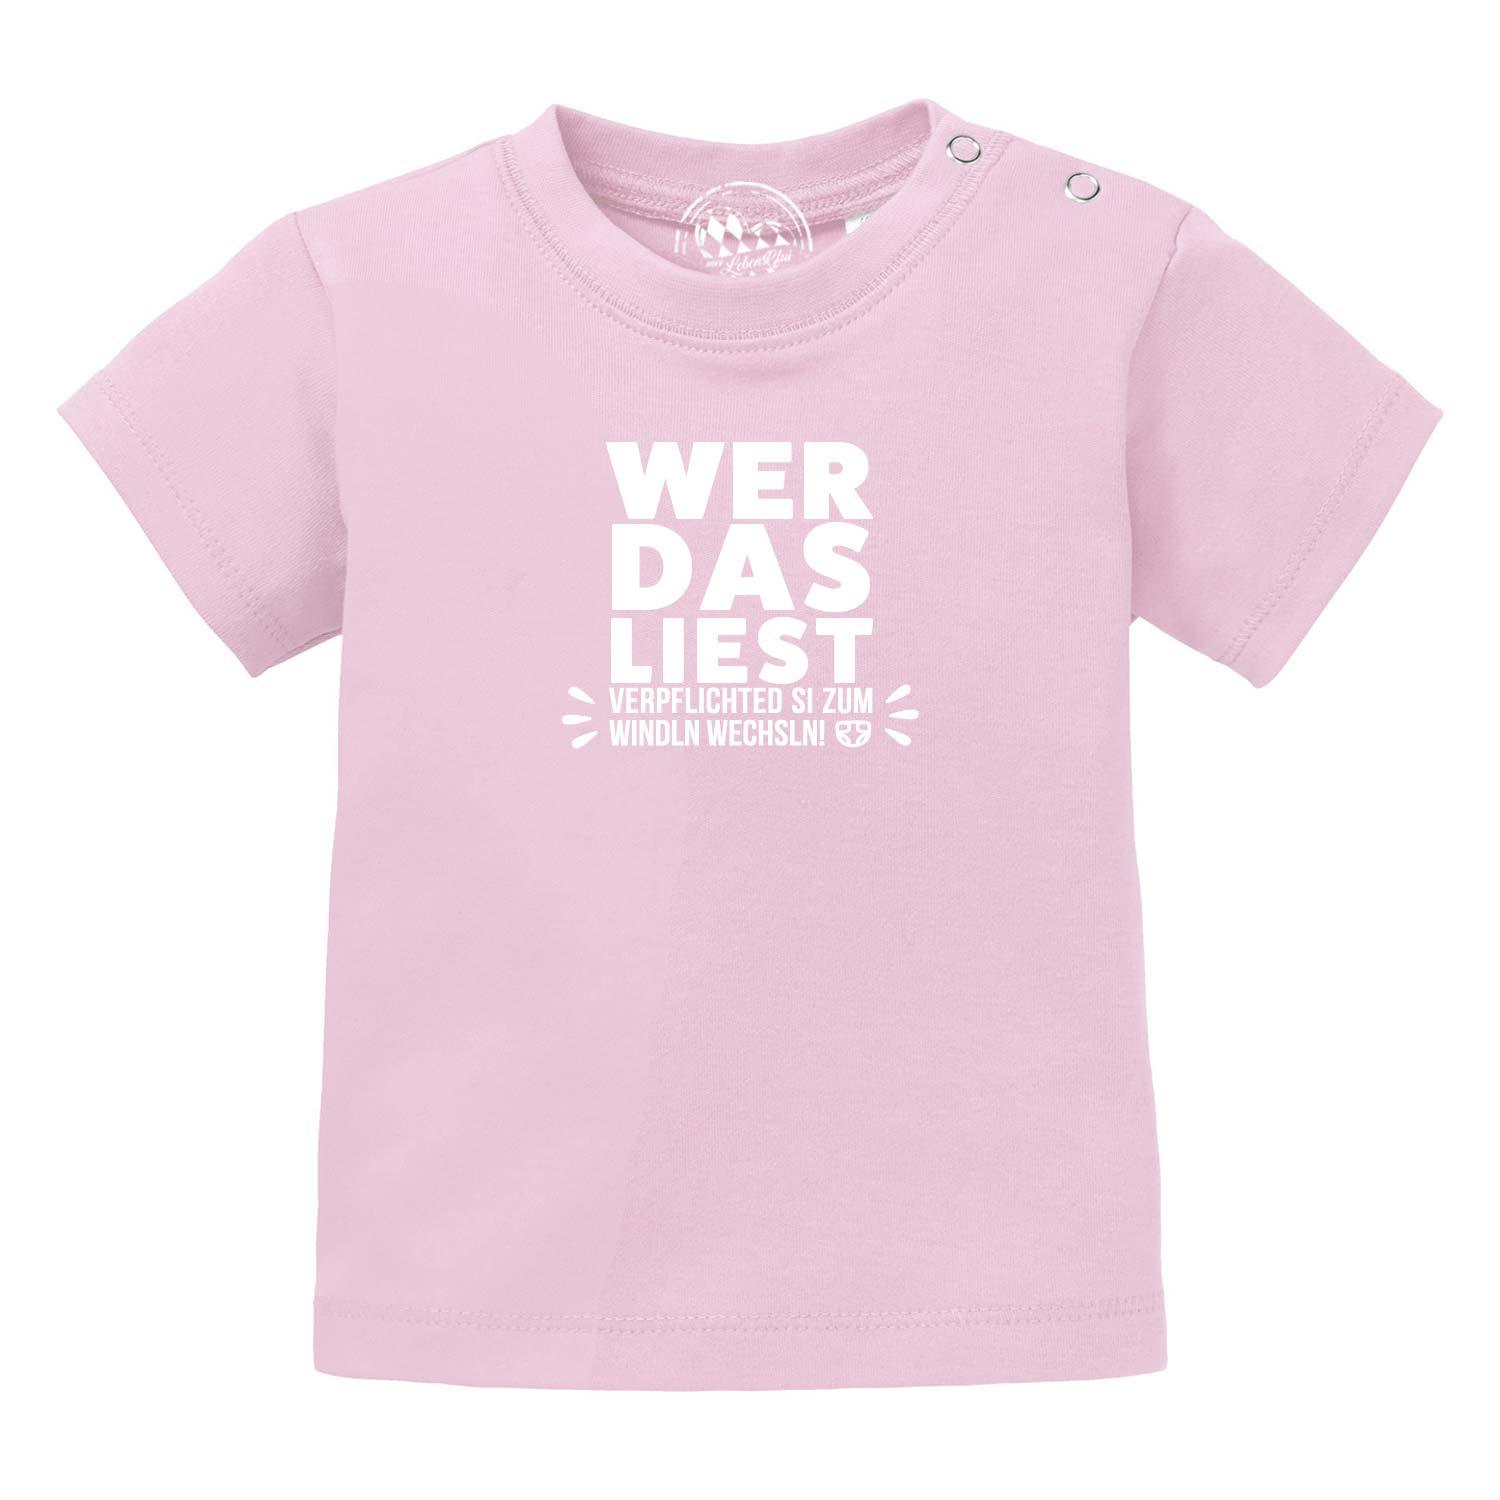 Baby T-Shirt "Windln wechsln!" - bavariashop - mei LebensGfui